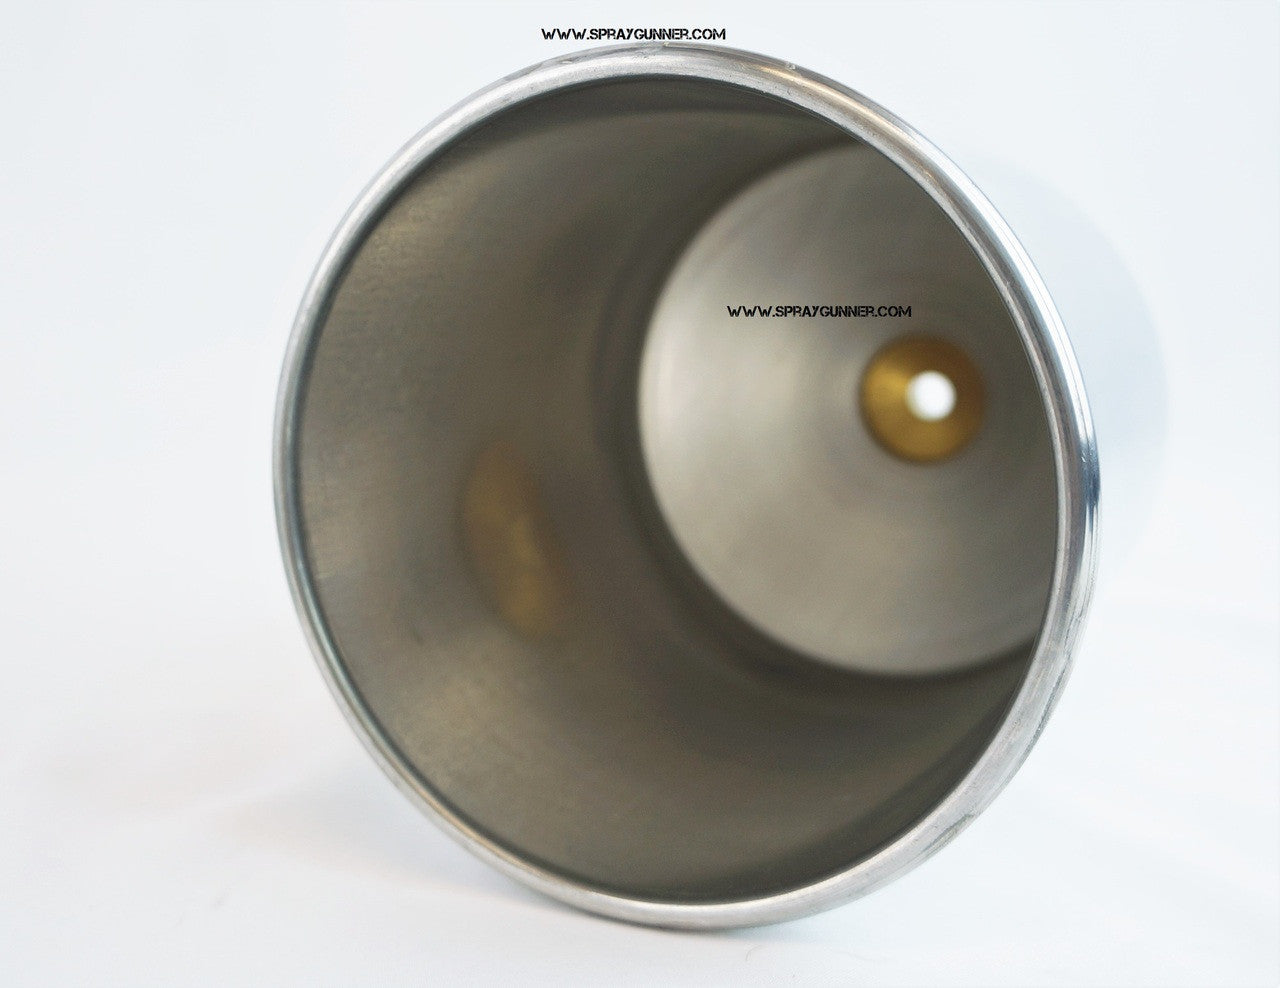 Grex CP-600AL Aluminum Cup with Lid CP-600AL Grex Airbrush